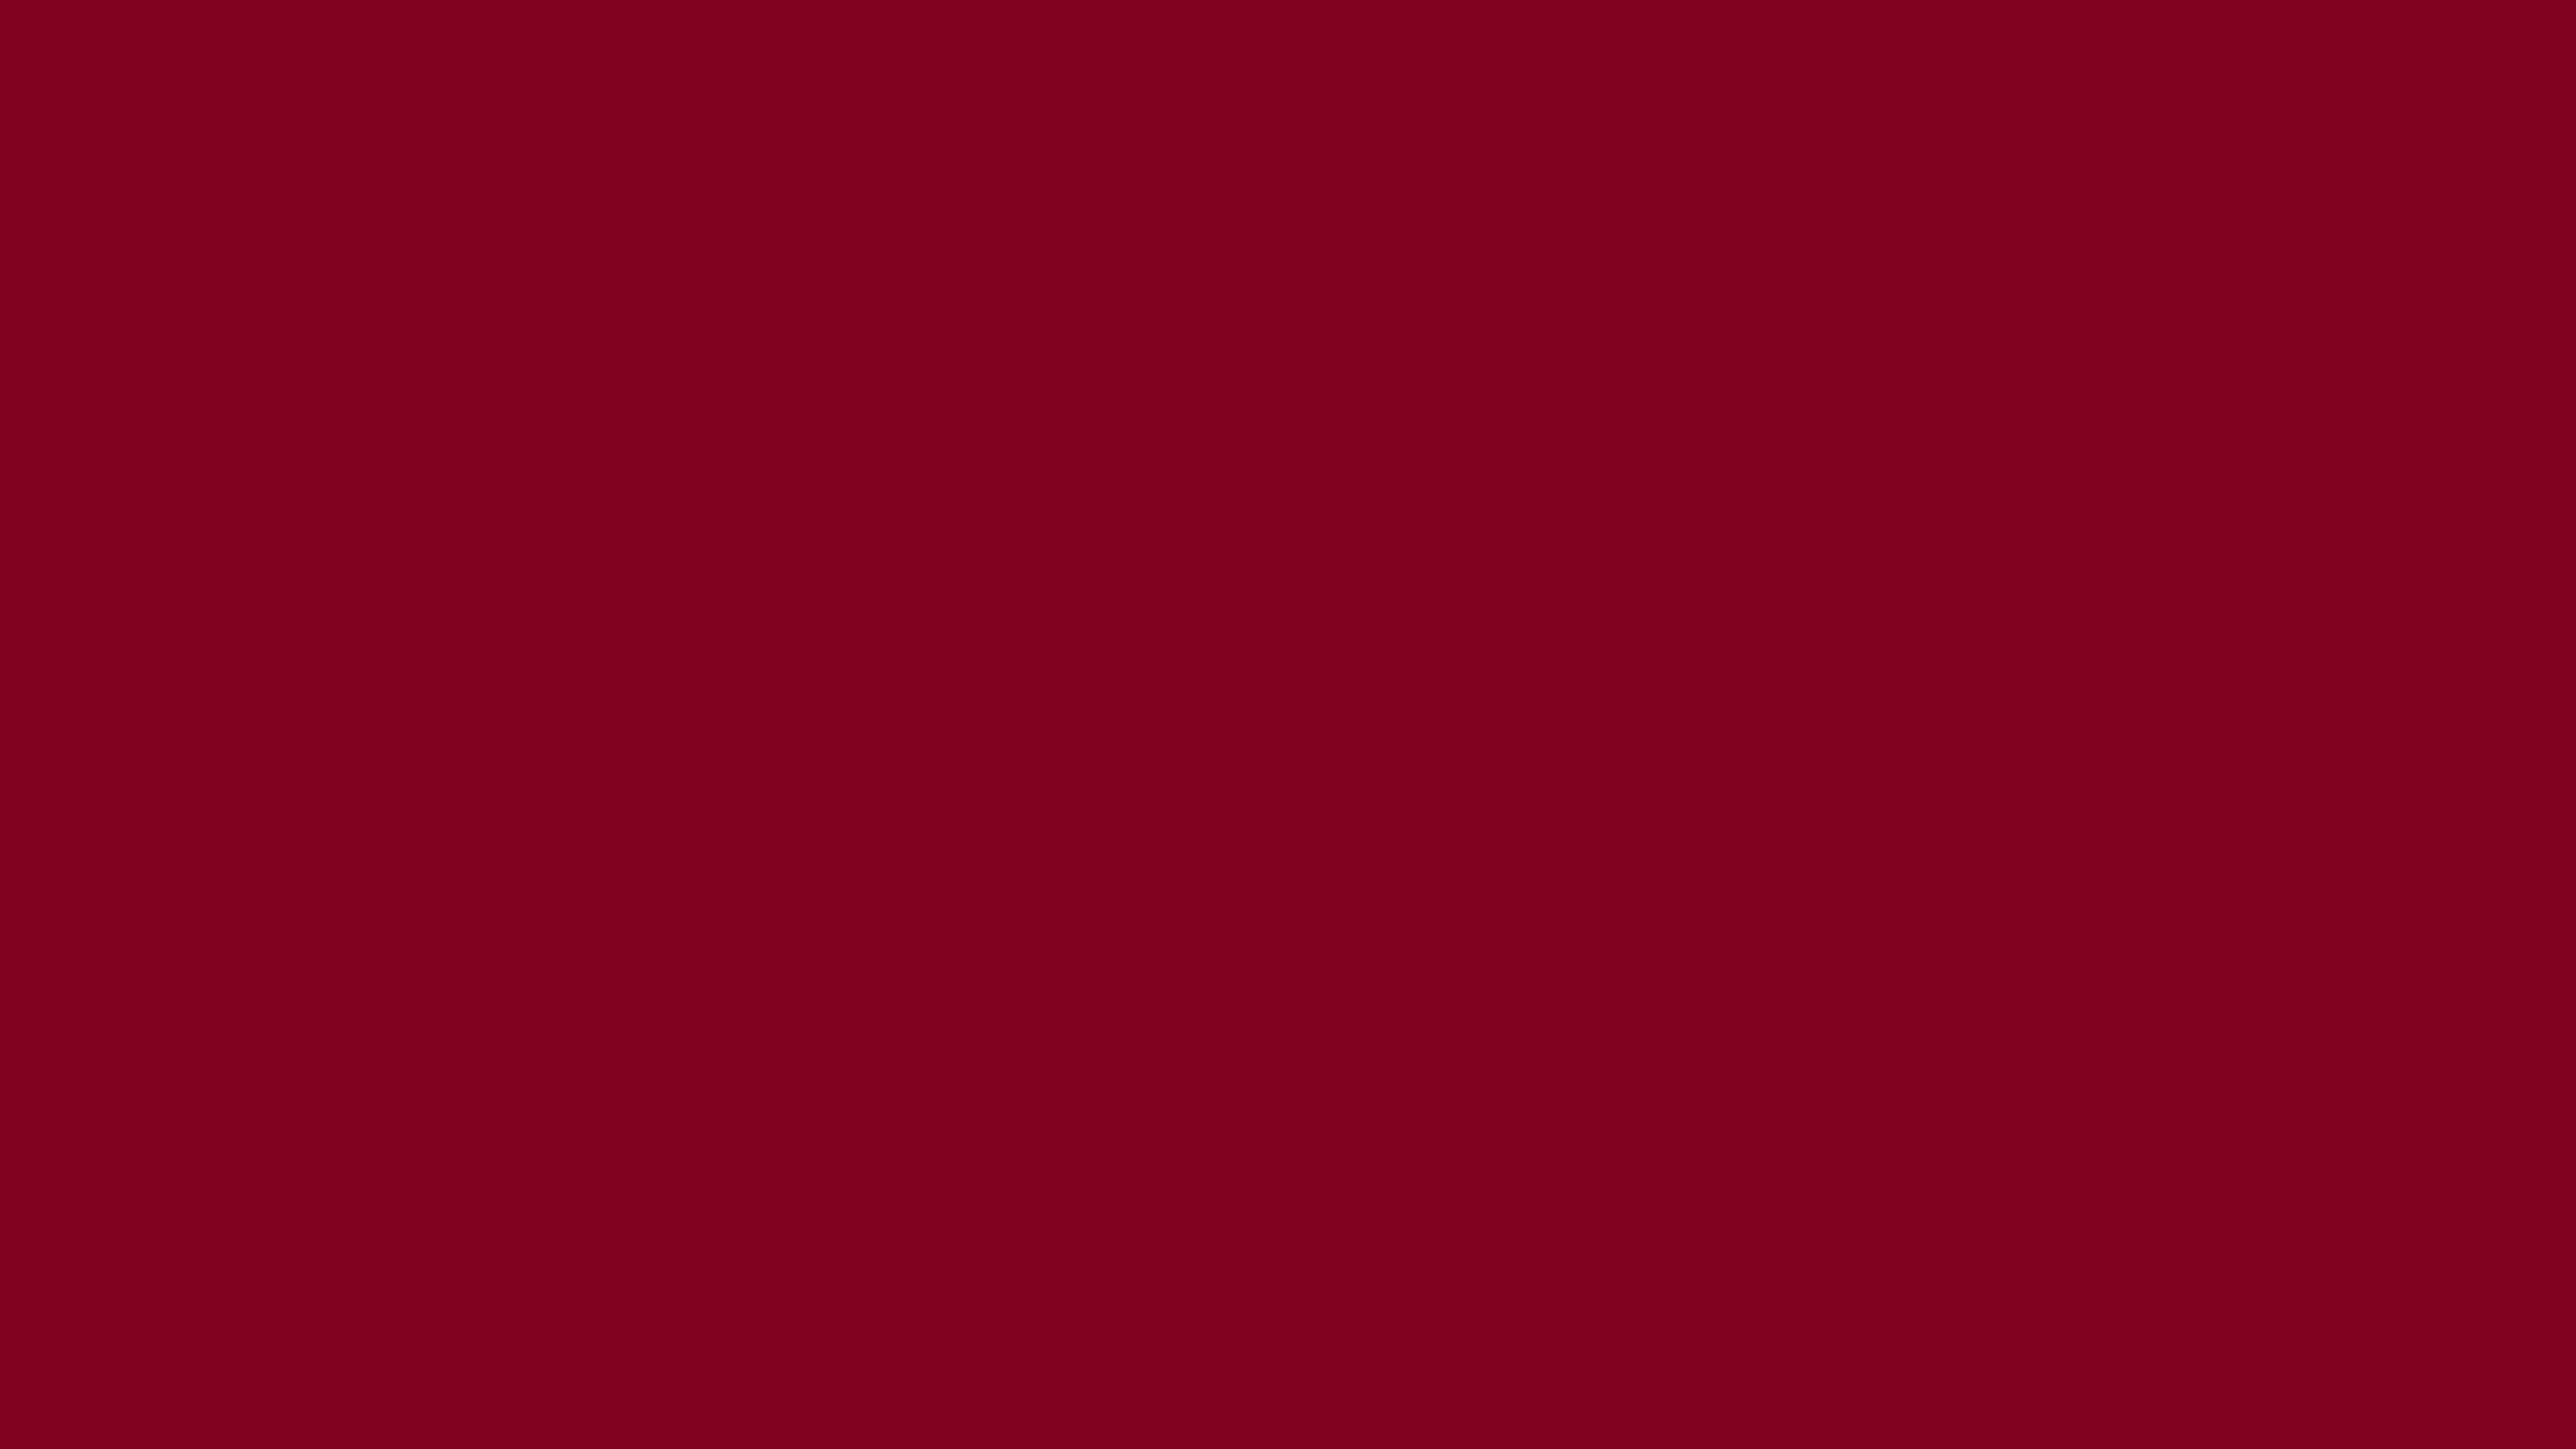 7680x4320 Burgundy Solid Color Background